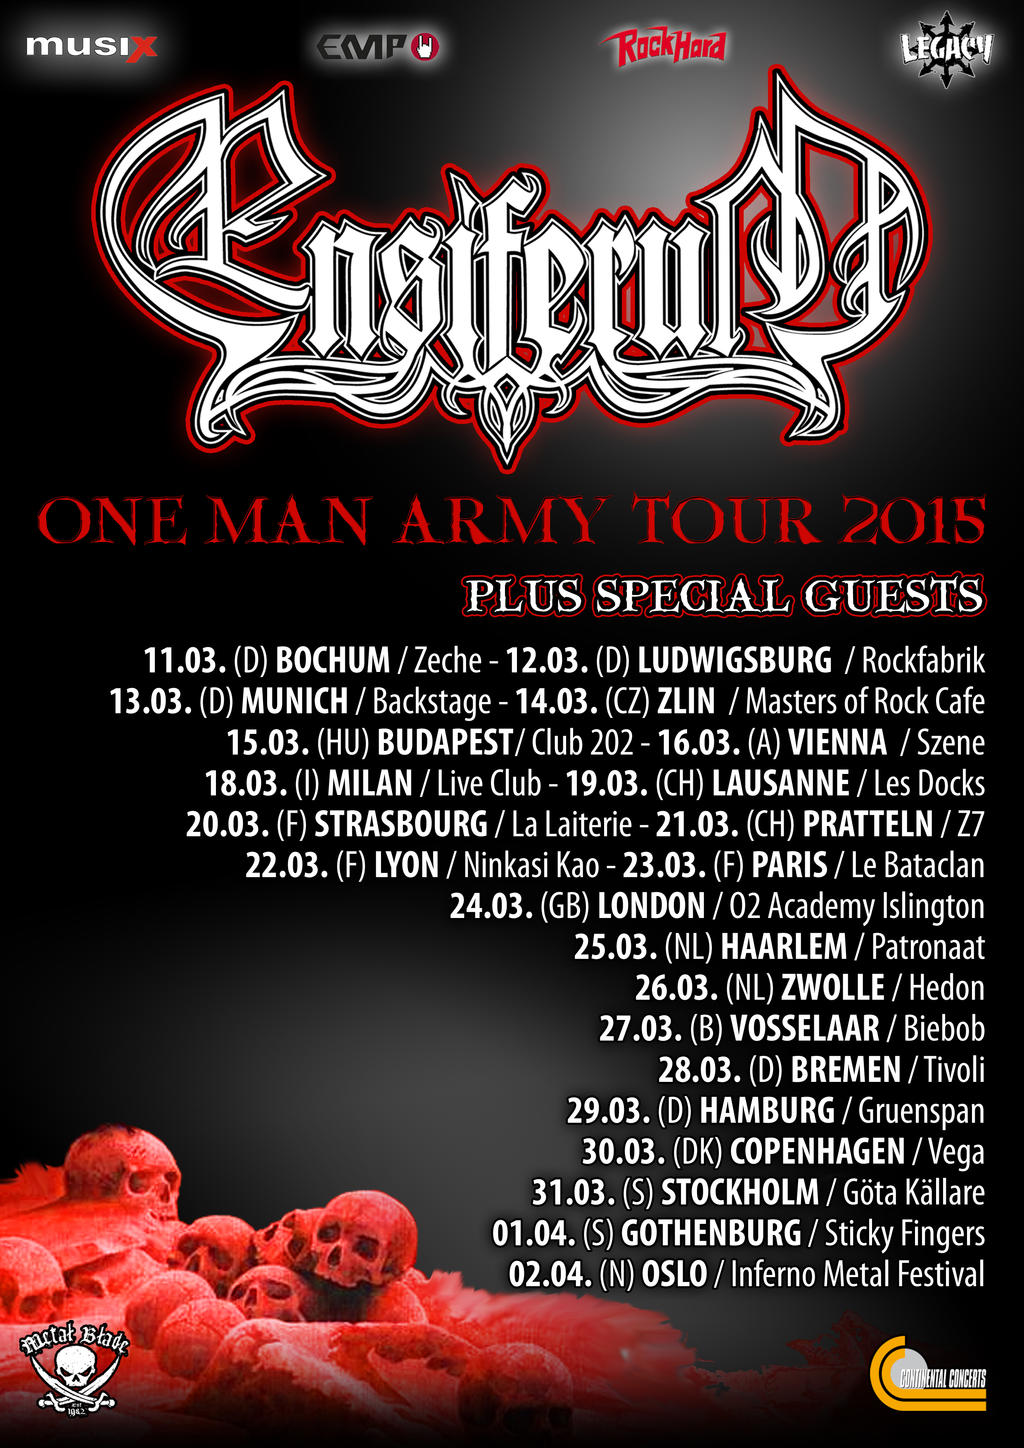 Ensiferum - on the new record